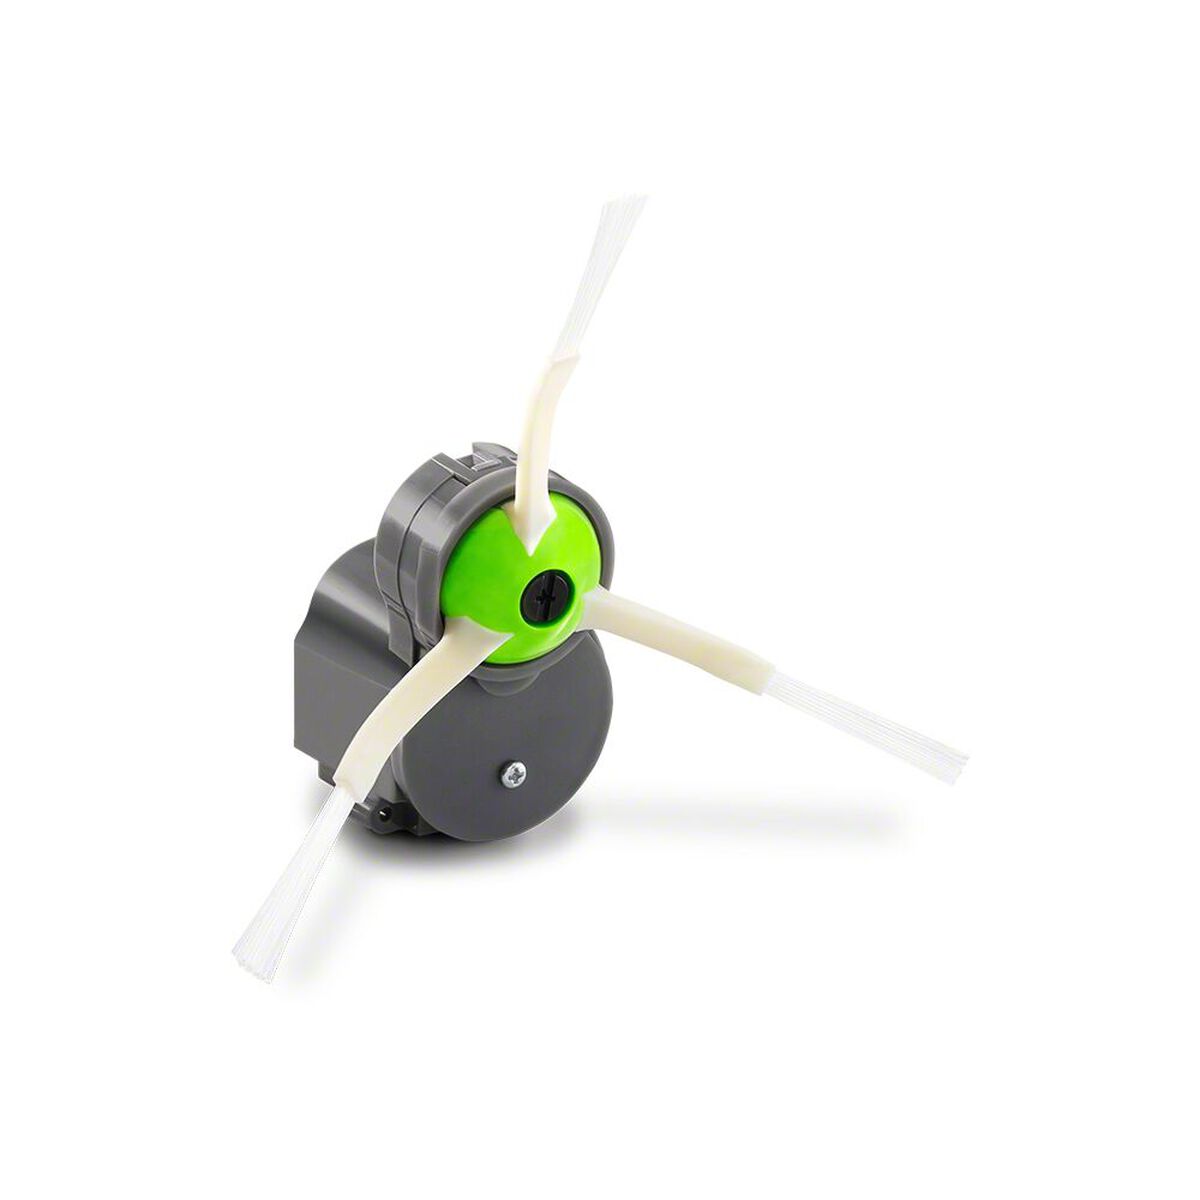 BAKUUM x2 Rodillos principales, cepillo central para iRobot Roomba Serie  600 y 700. Cepillo para iRobot Roomba multifunción de cerdas y silicona :  : Hogar y cocina